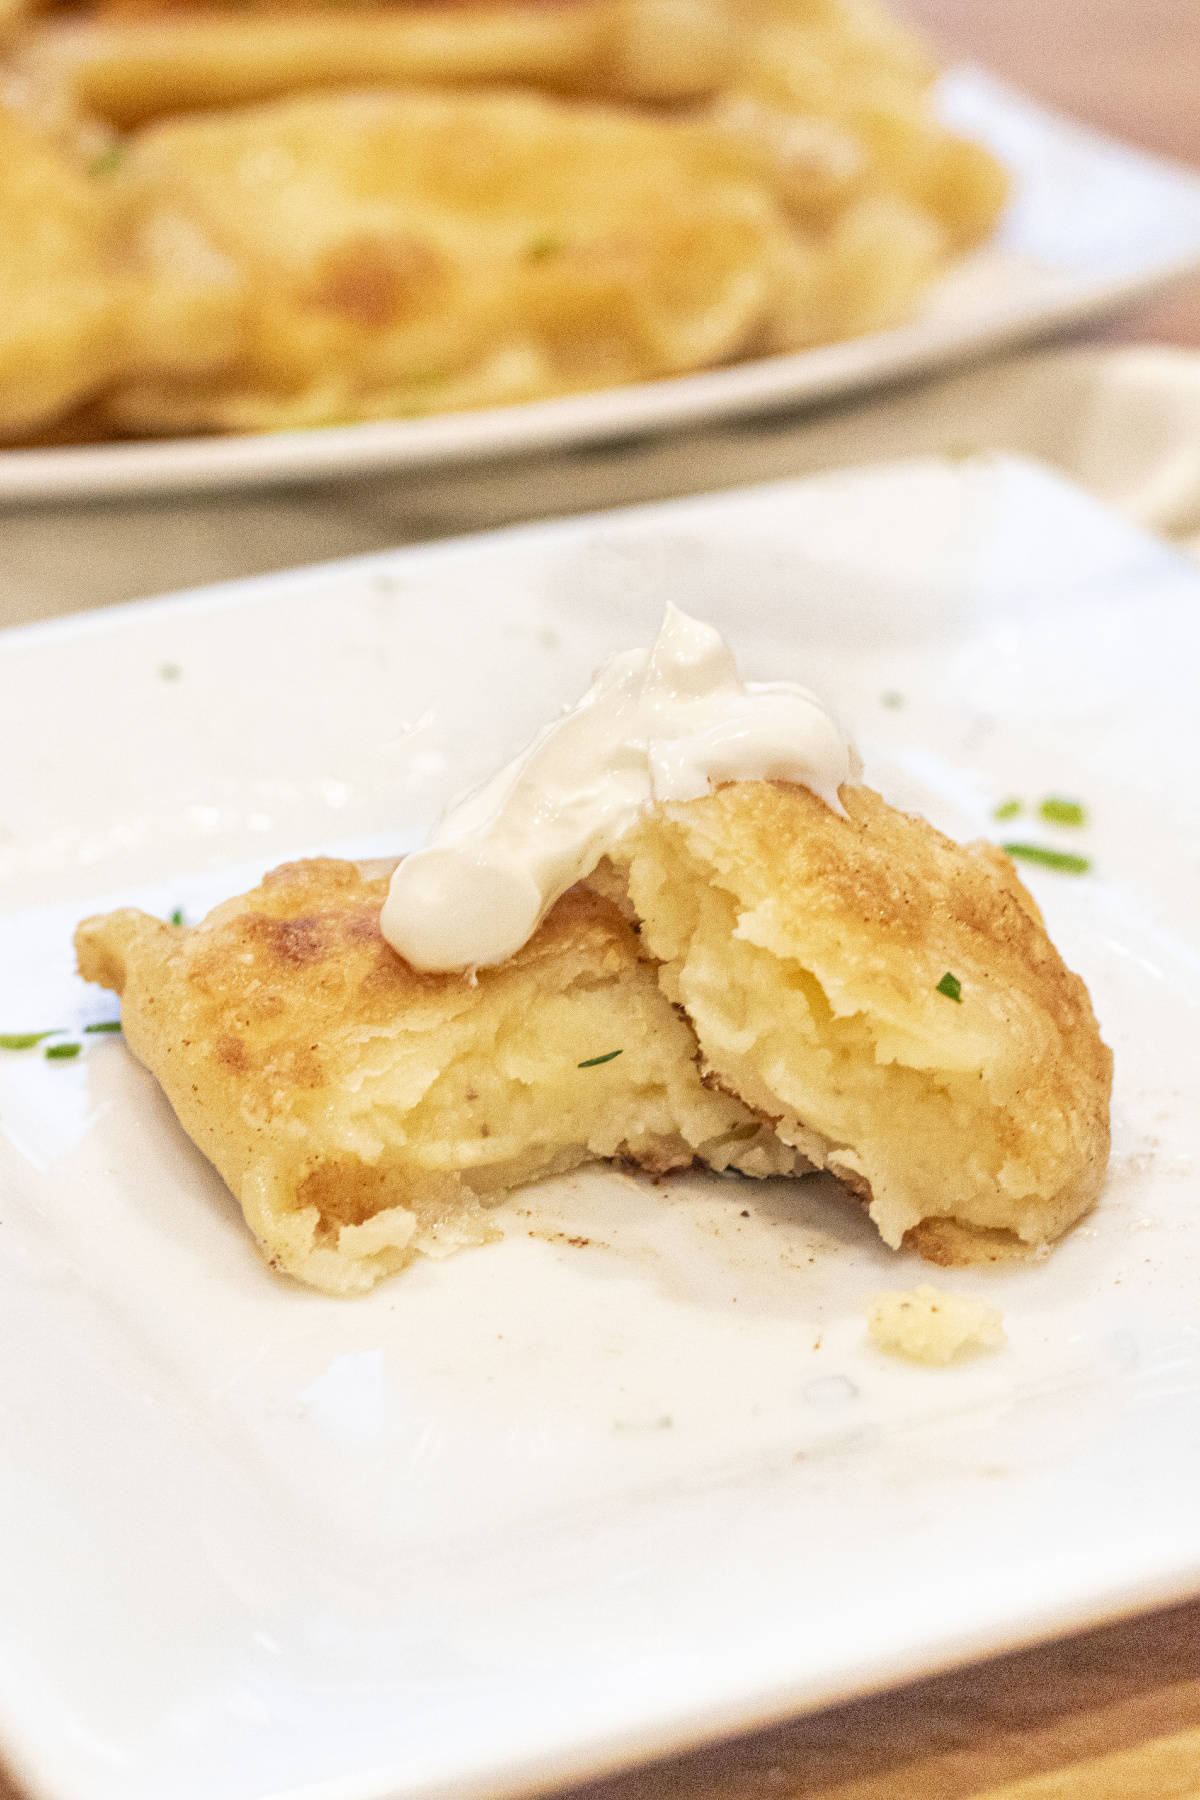 a potato pierogi on a plate in half with a dollop of sour cream.